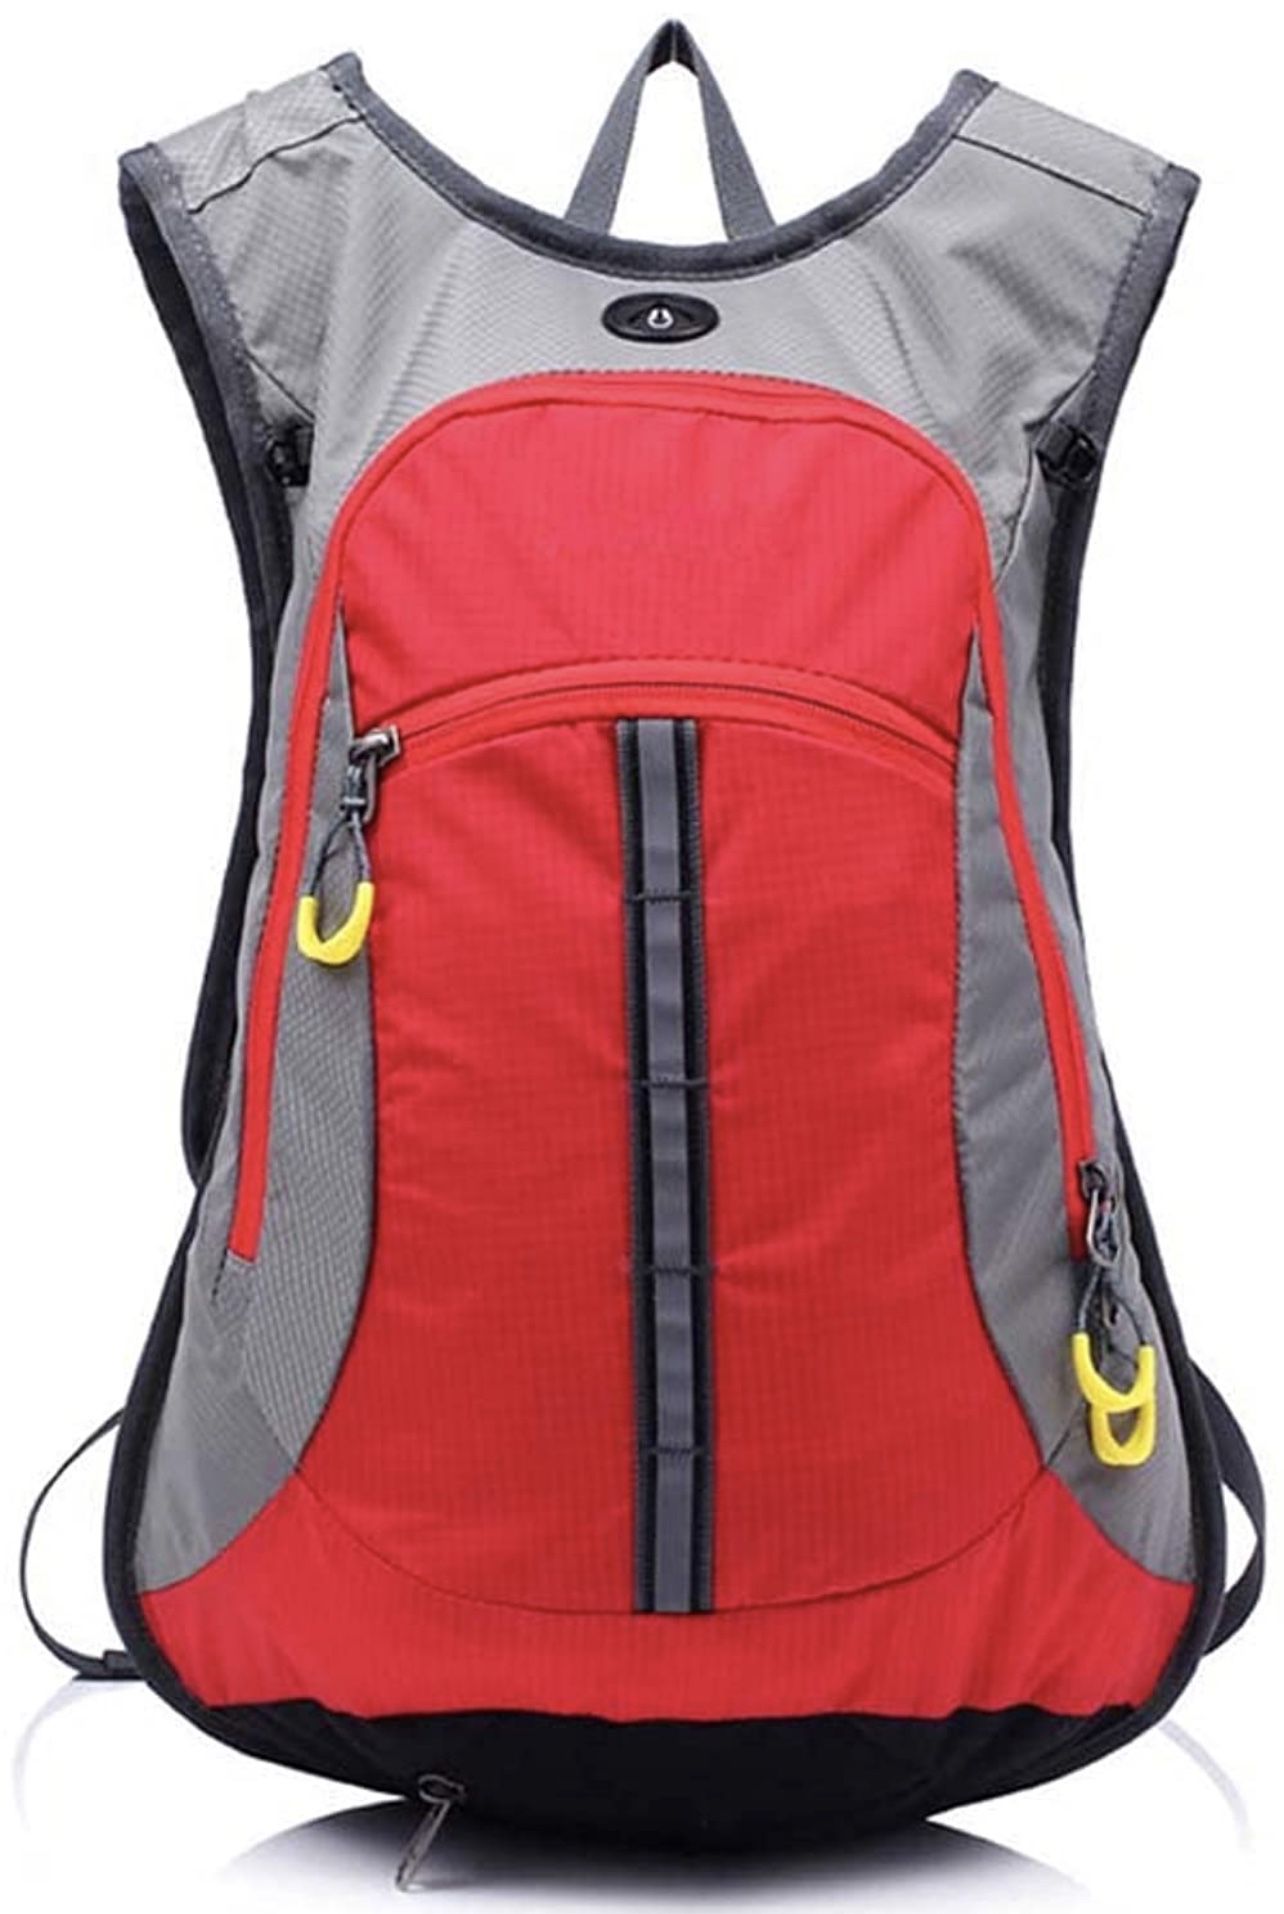 (brand new) Lixada Bike Backpack,15L Bicycle Shoulder Backpack Waterproof Breathable Rucksack with Rain Cover